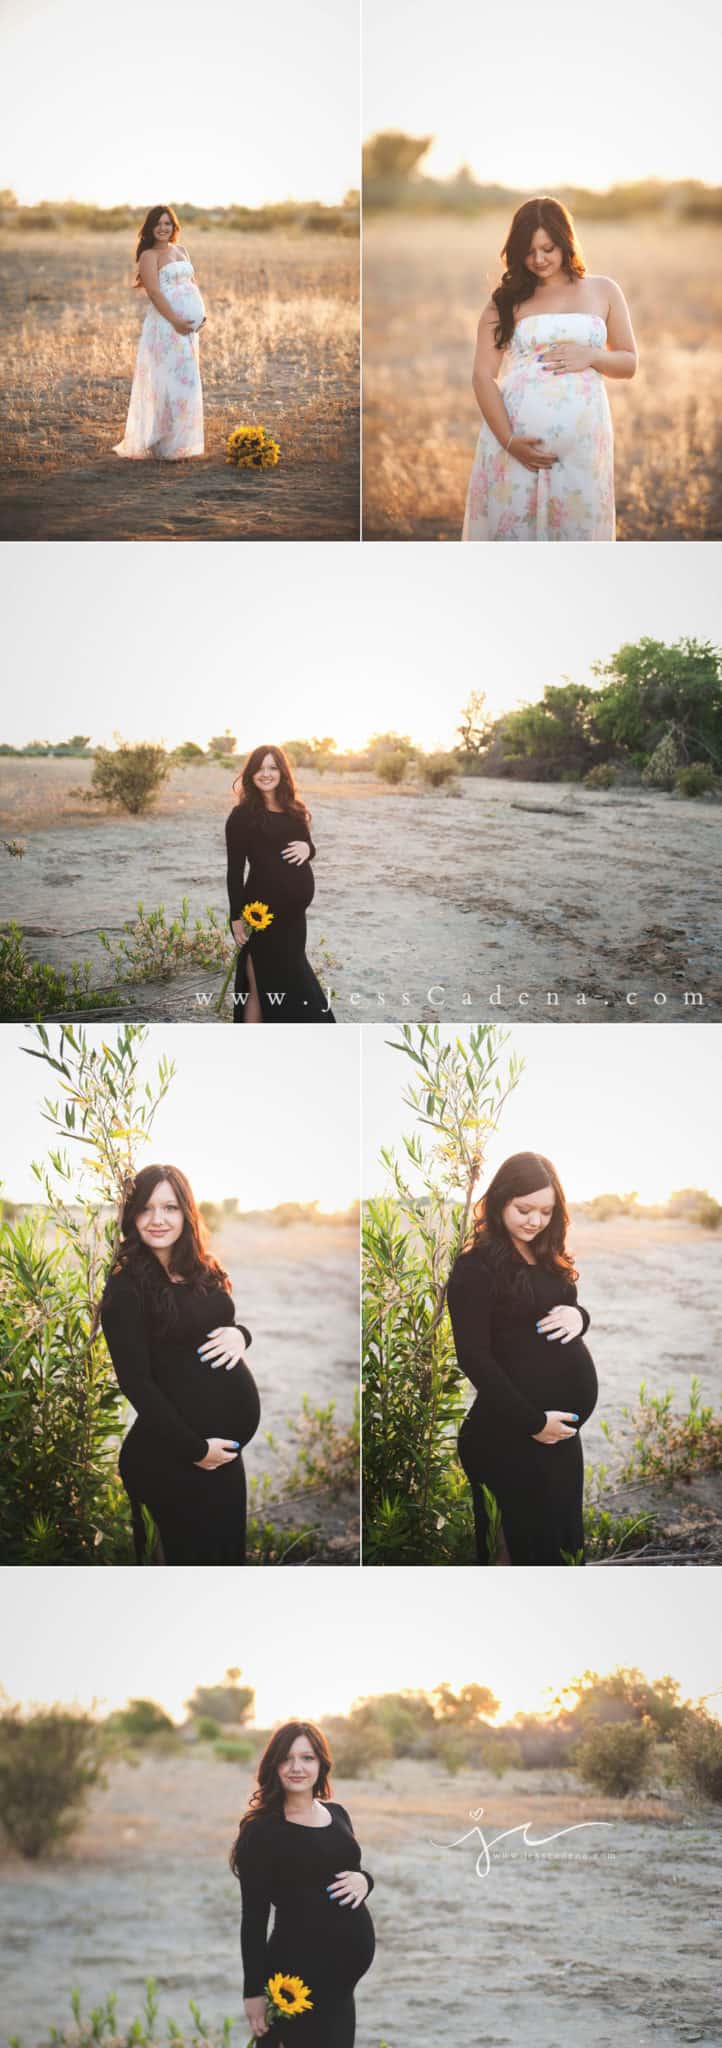 Katie-Bakersfield-Maternity-Photographer-4